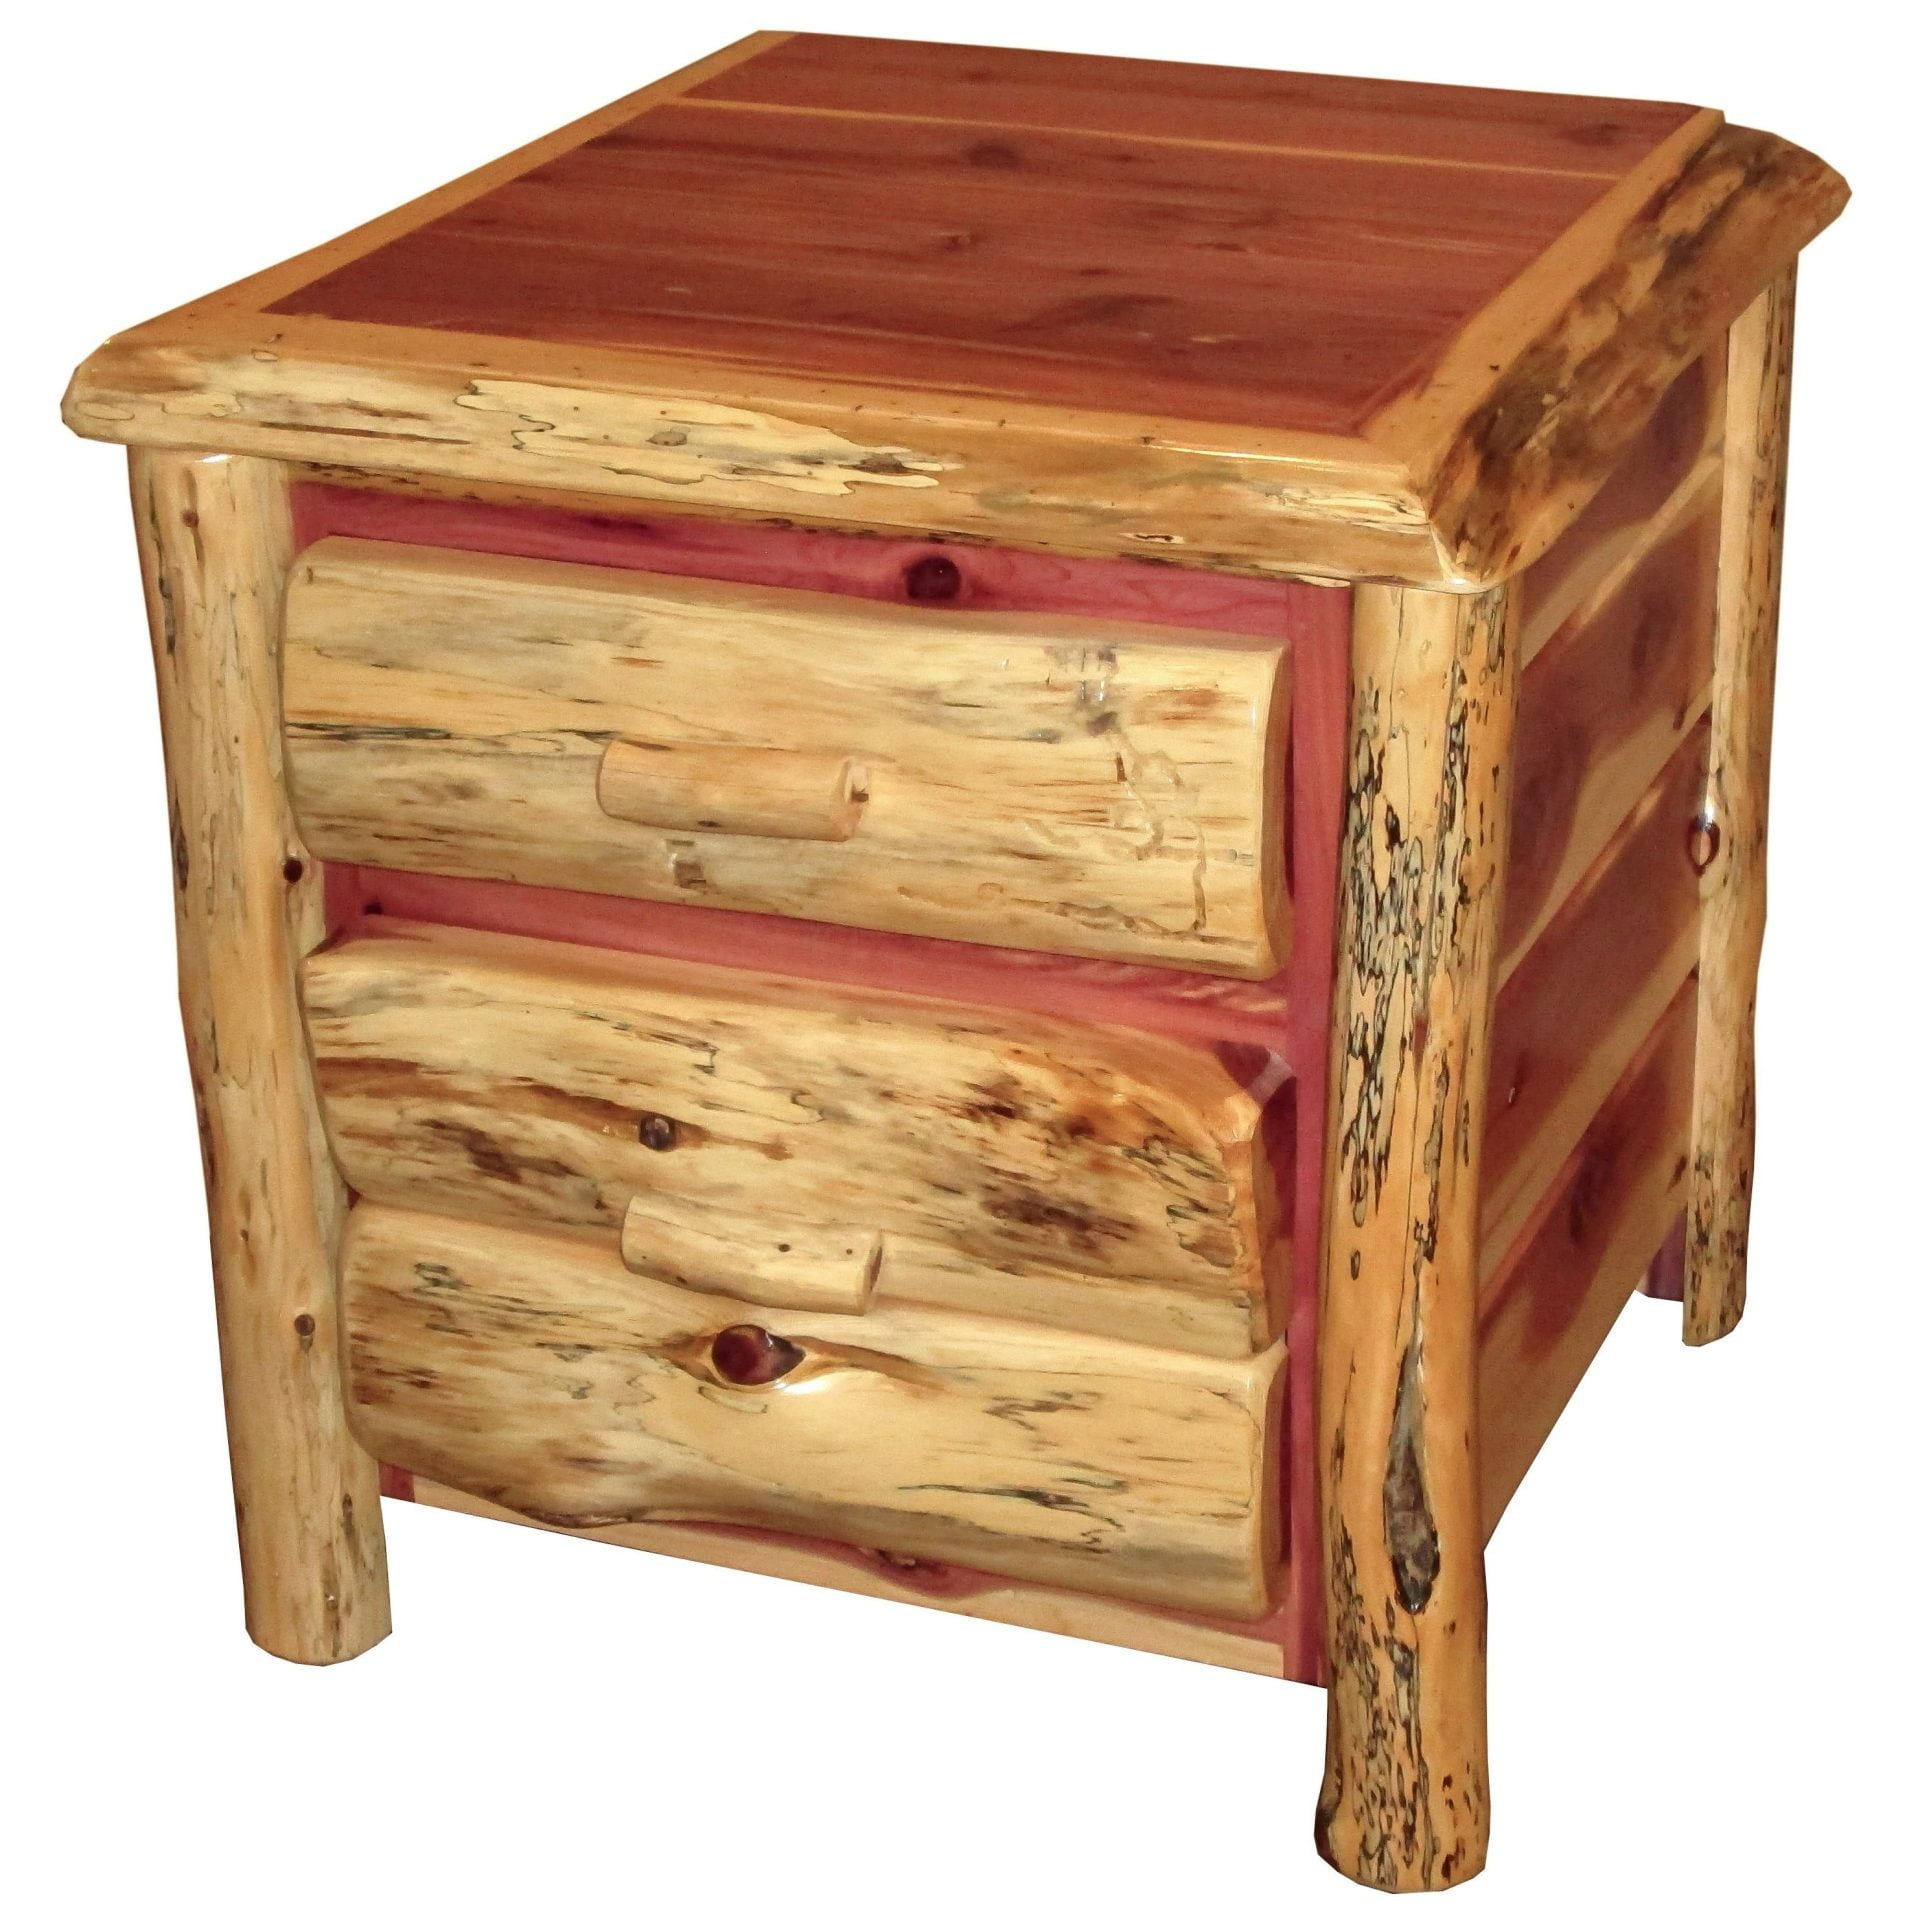 Rustic Red Cedar Log 2-Drawer End Table